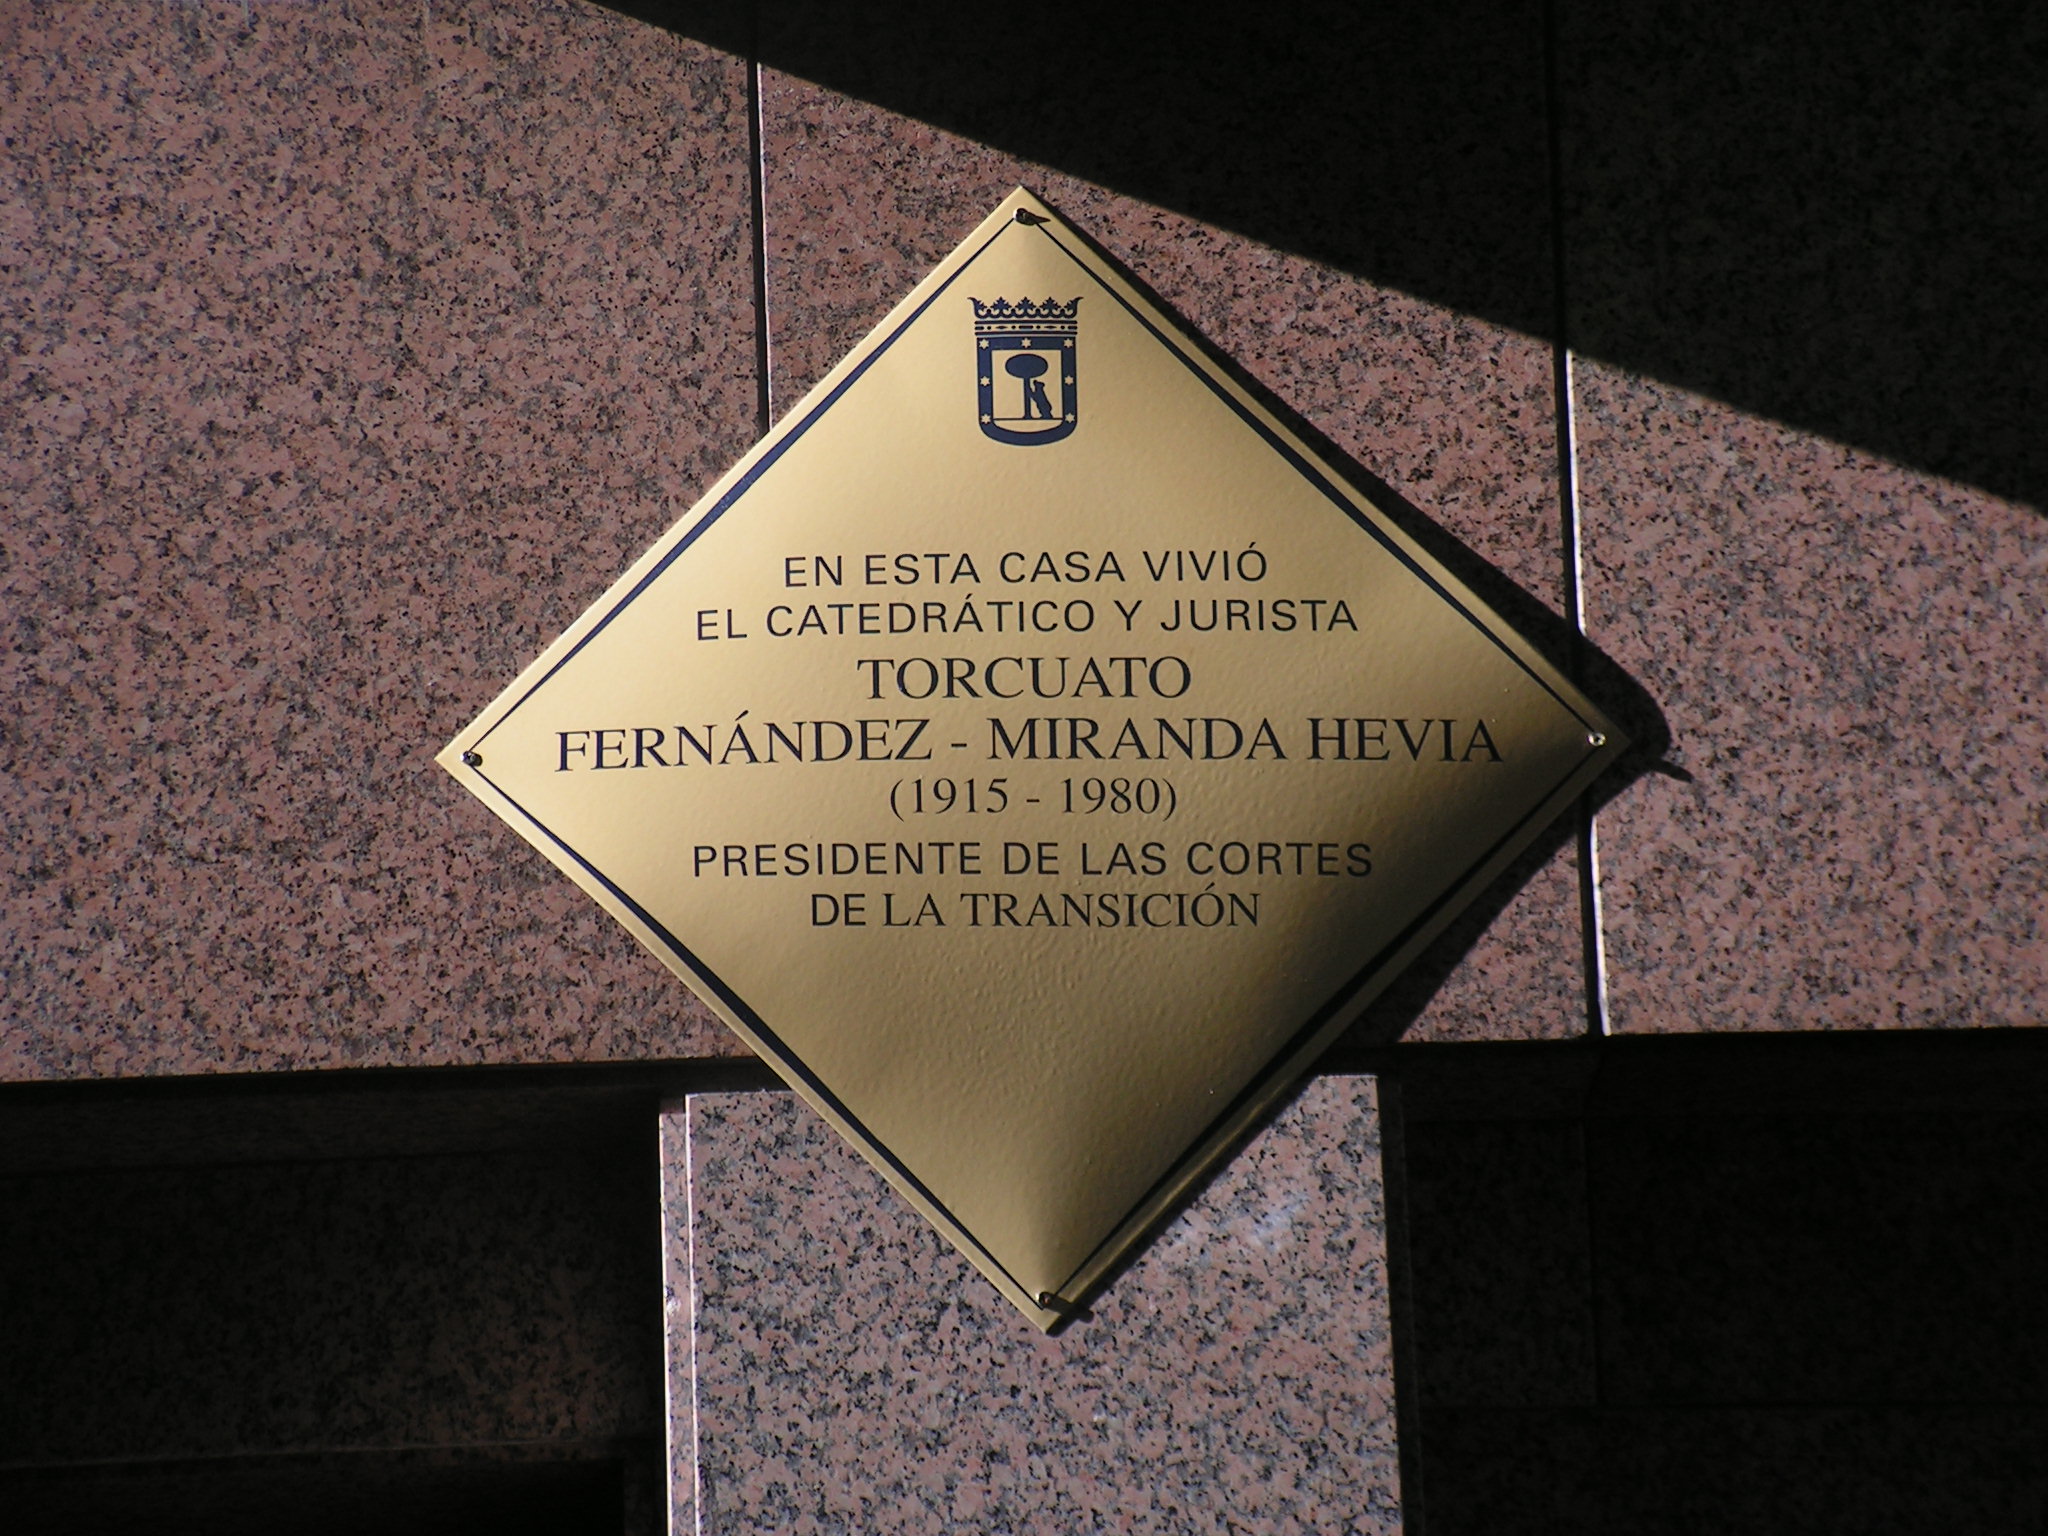 Torcuato Fernndez-Miranda Hevia